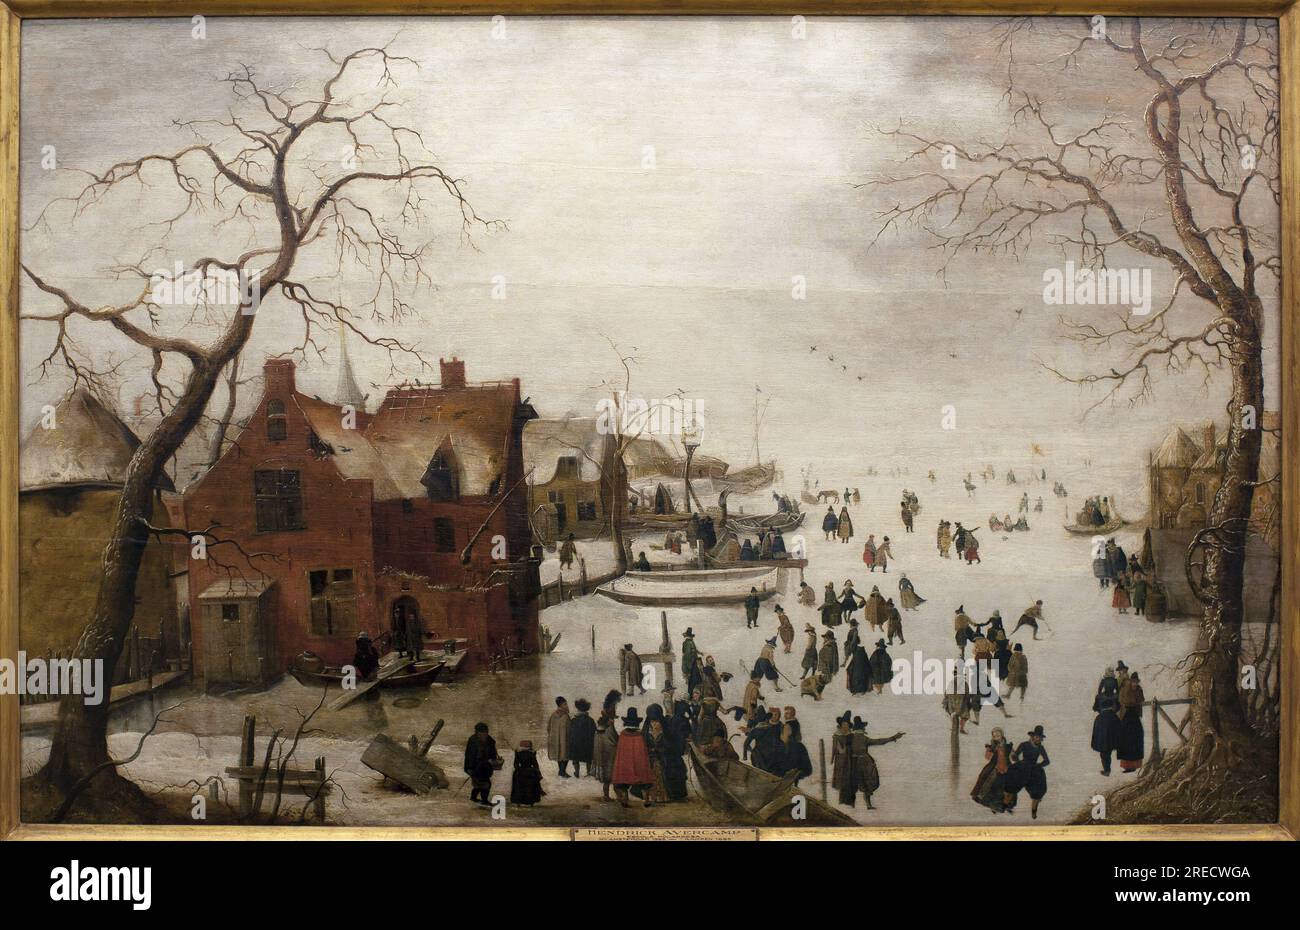 Scene d'hiver - Peinture de Hendrick Avercamp (1585-1634), huile sur bois, vers 1620 (Winter scene, by Hendrick Avercamp, oil on panel, circa 1620) - Musee d'Evora (Portugal) Stock Photo